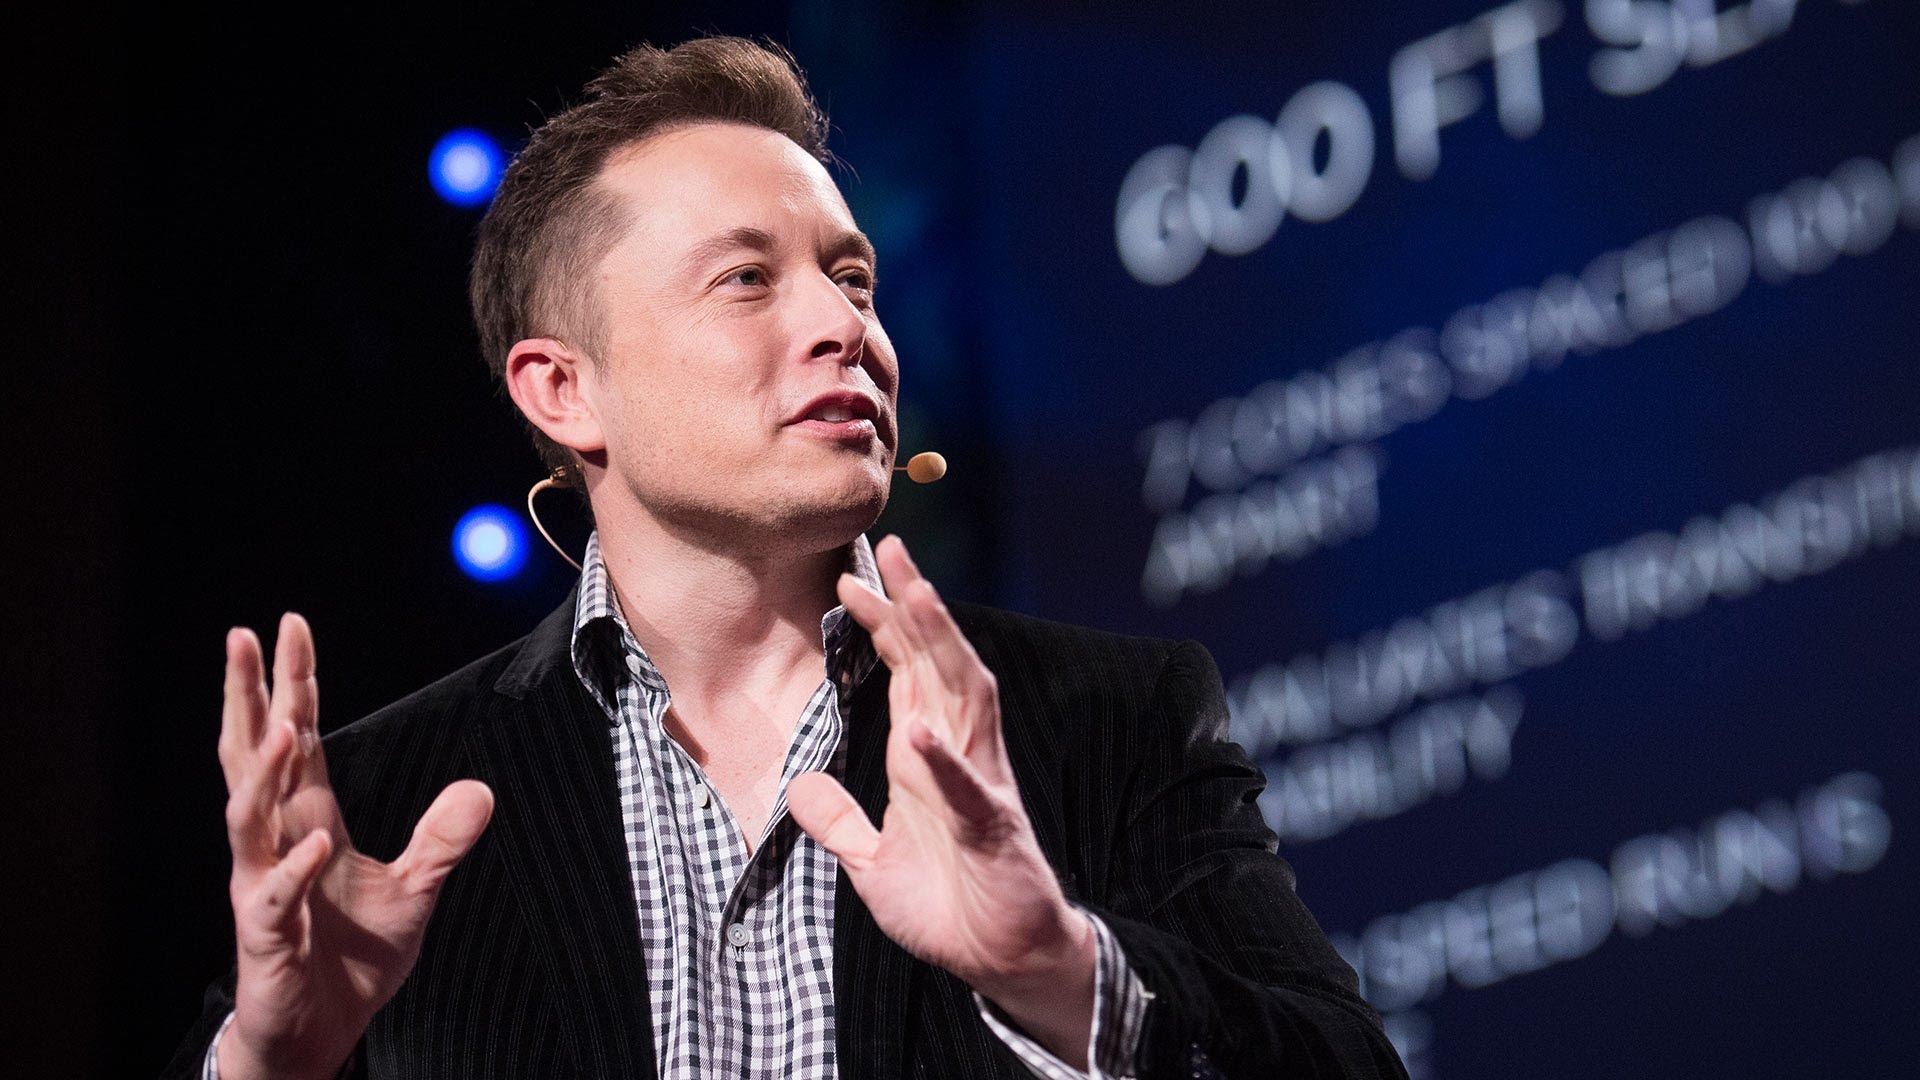 Elon Musk Looking To Launch 700 Global Internet Satellites As His Next Venture?